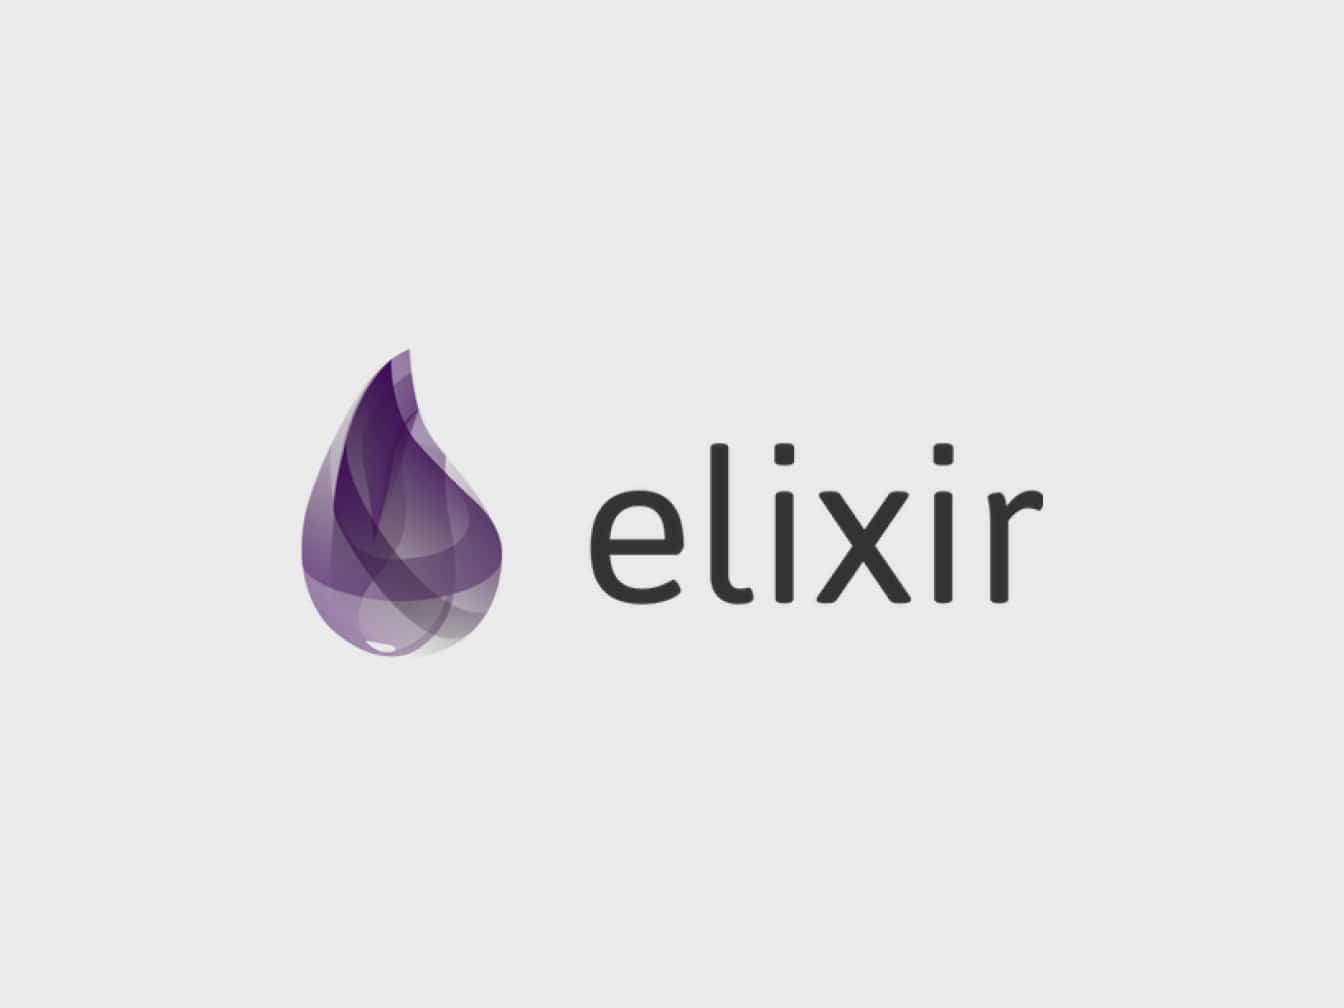 the logo for Elixir.